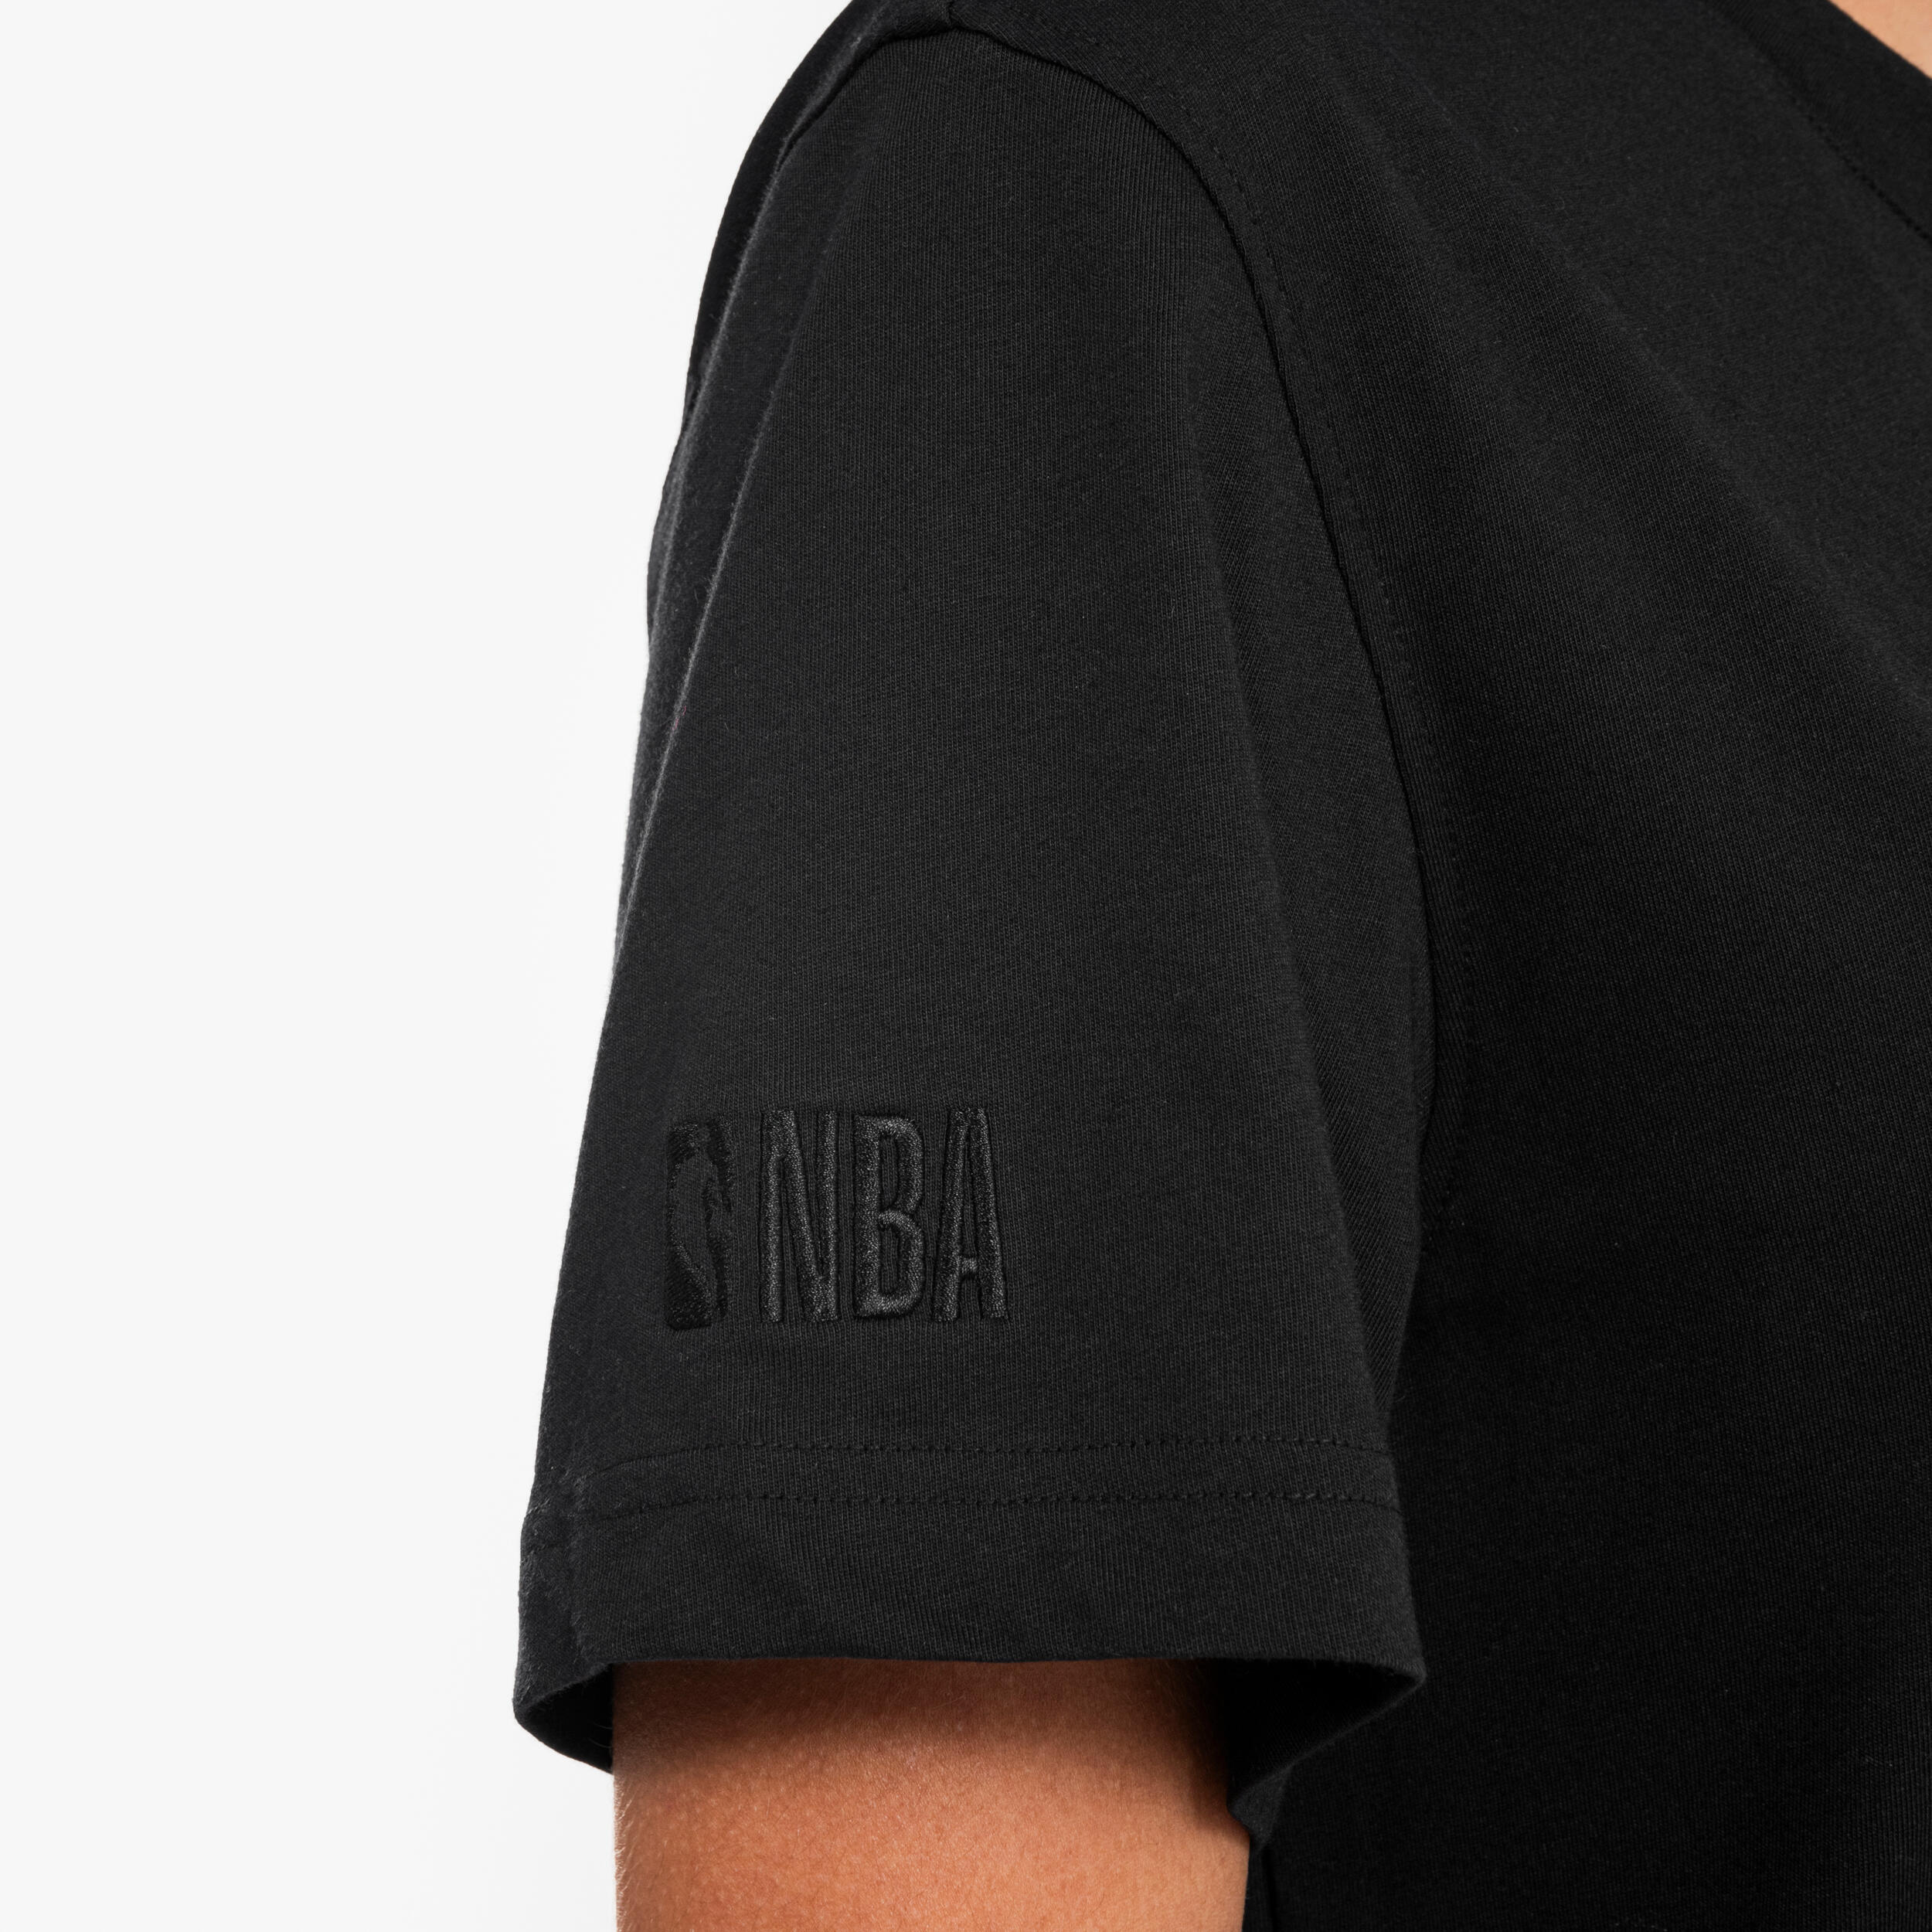 Unisex Basketball T-Shirt 900 AD - NBA Heat/Black 5/6